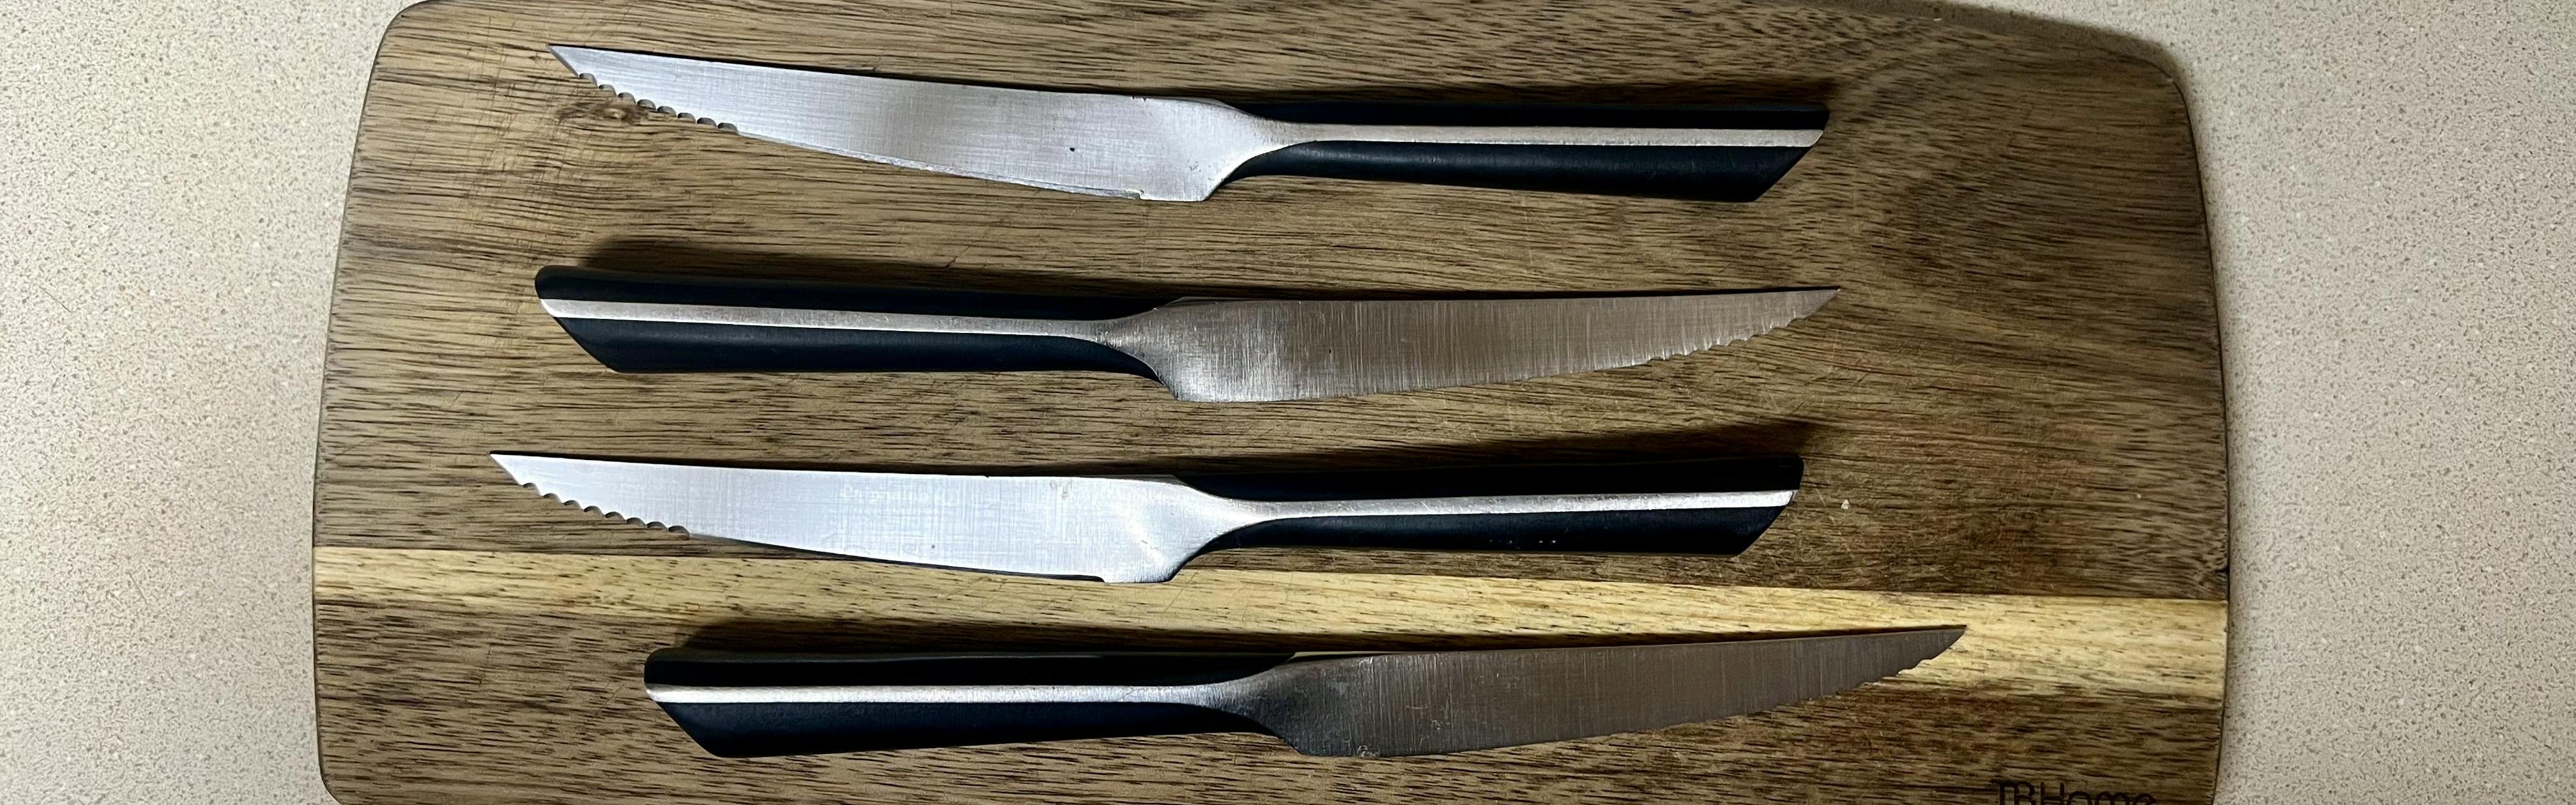 SET OF 4 - 5-Inch Blade Restaurant Style Steak Knives, Round Tip,  Thick-Grip Wood Handle Steak Knife Set